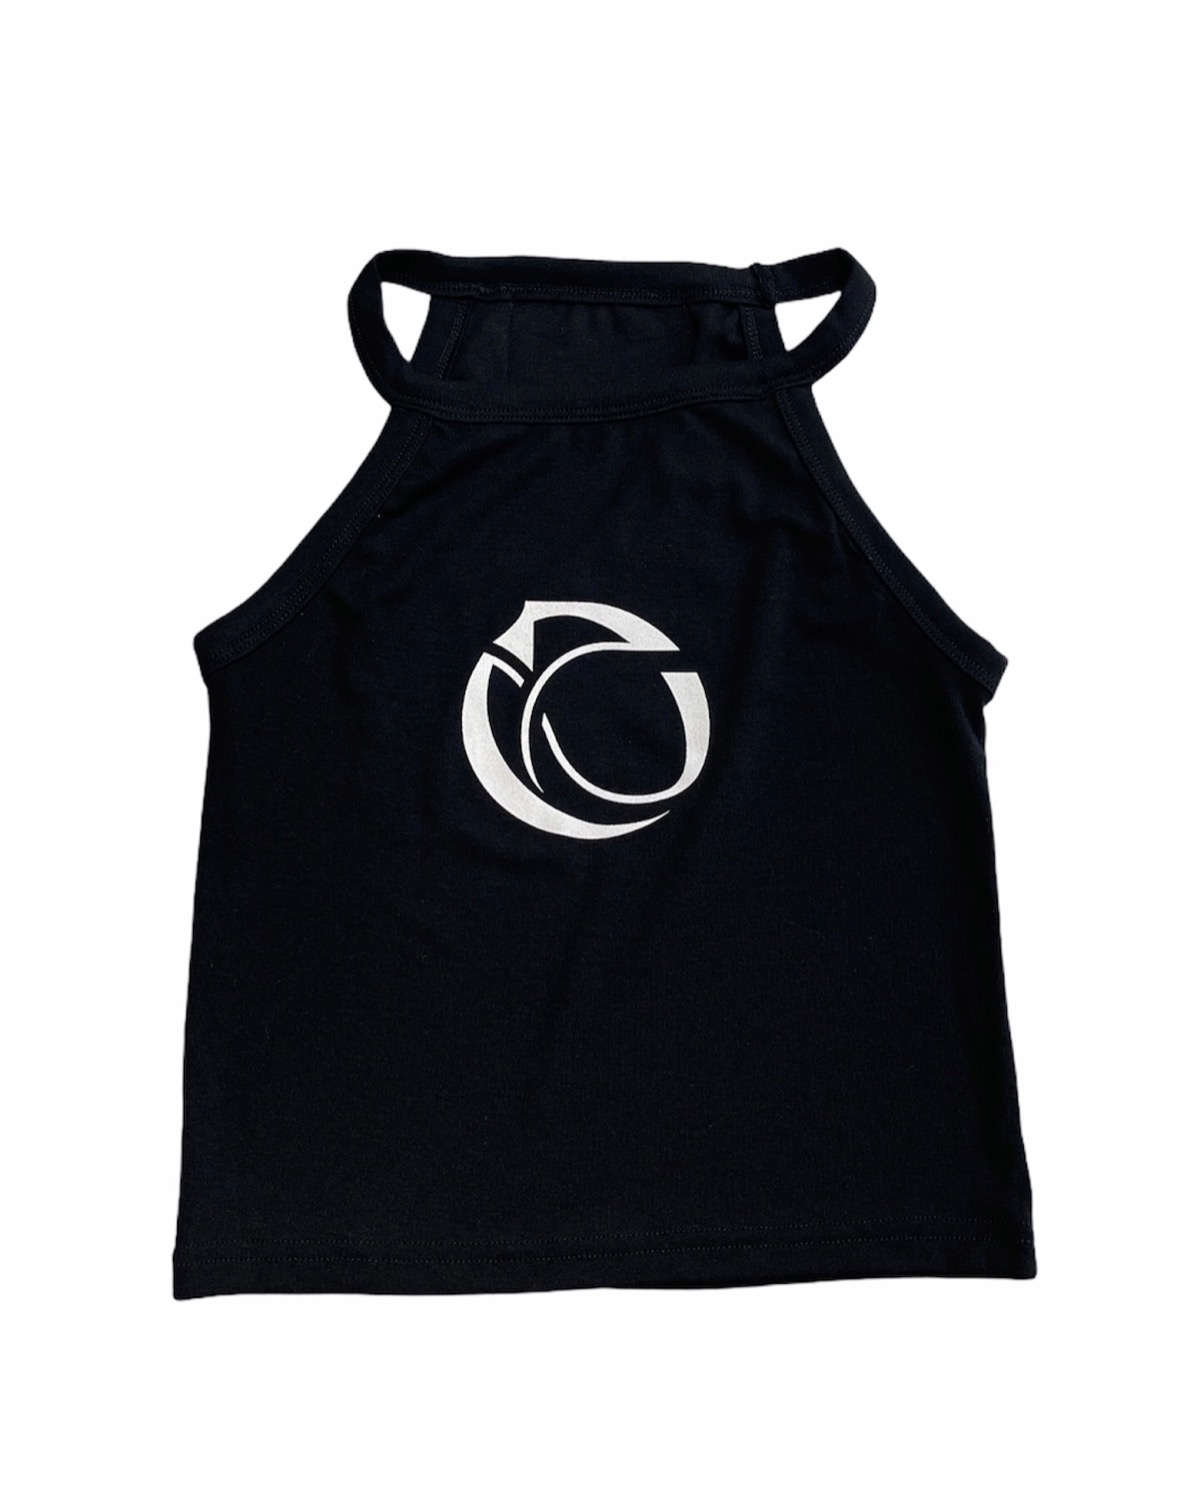 (panning made) signature logo Sleeveless shirt Black